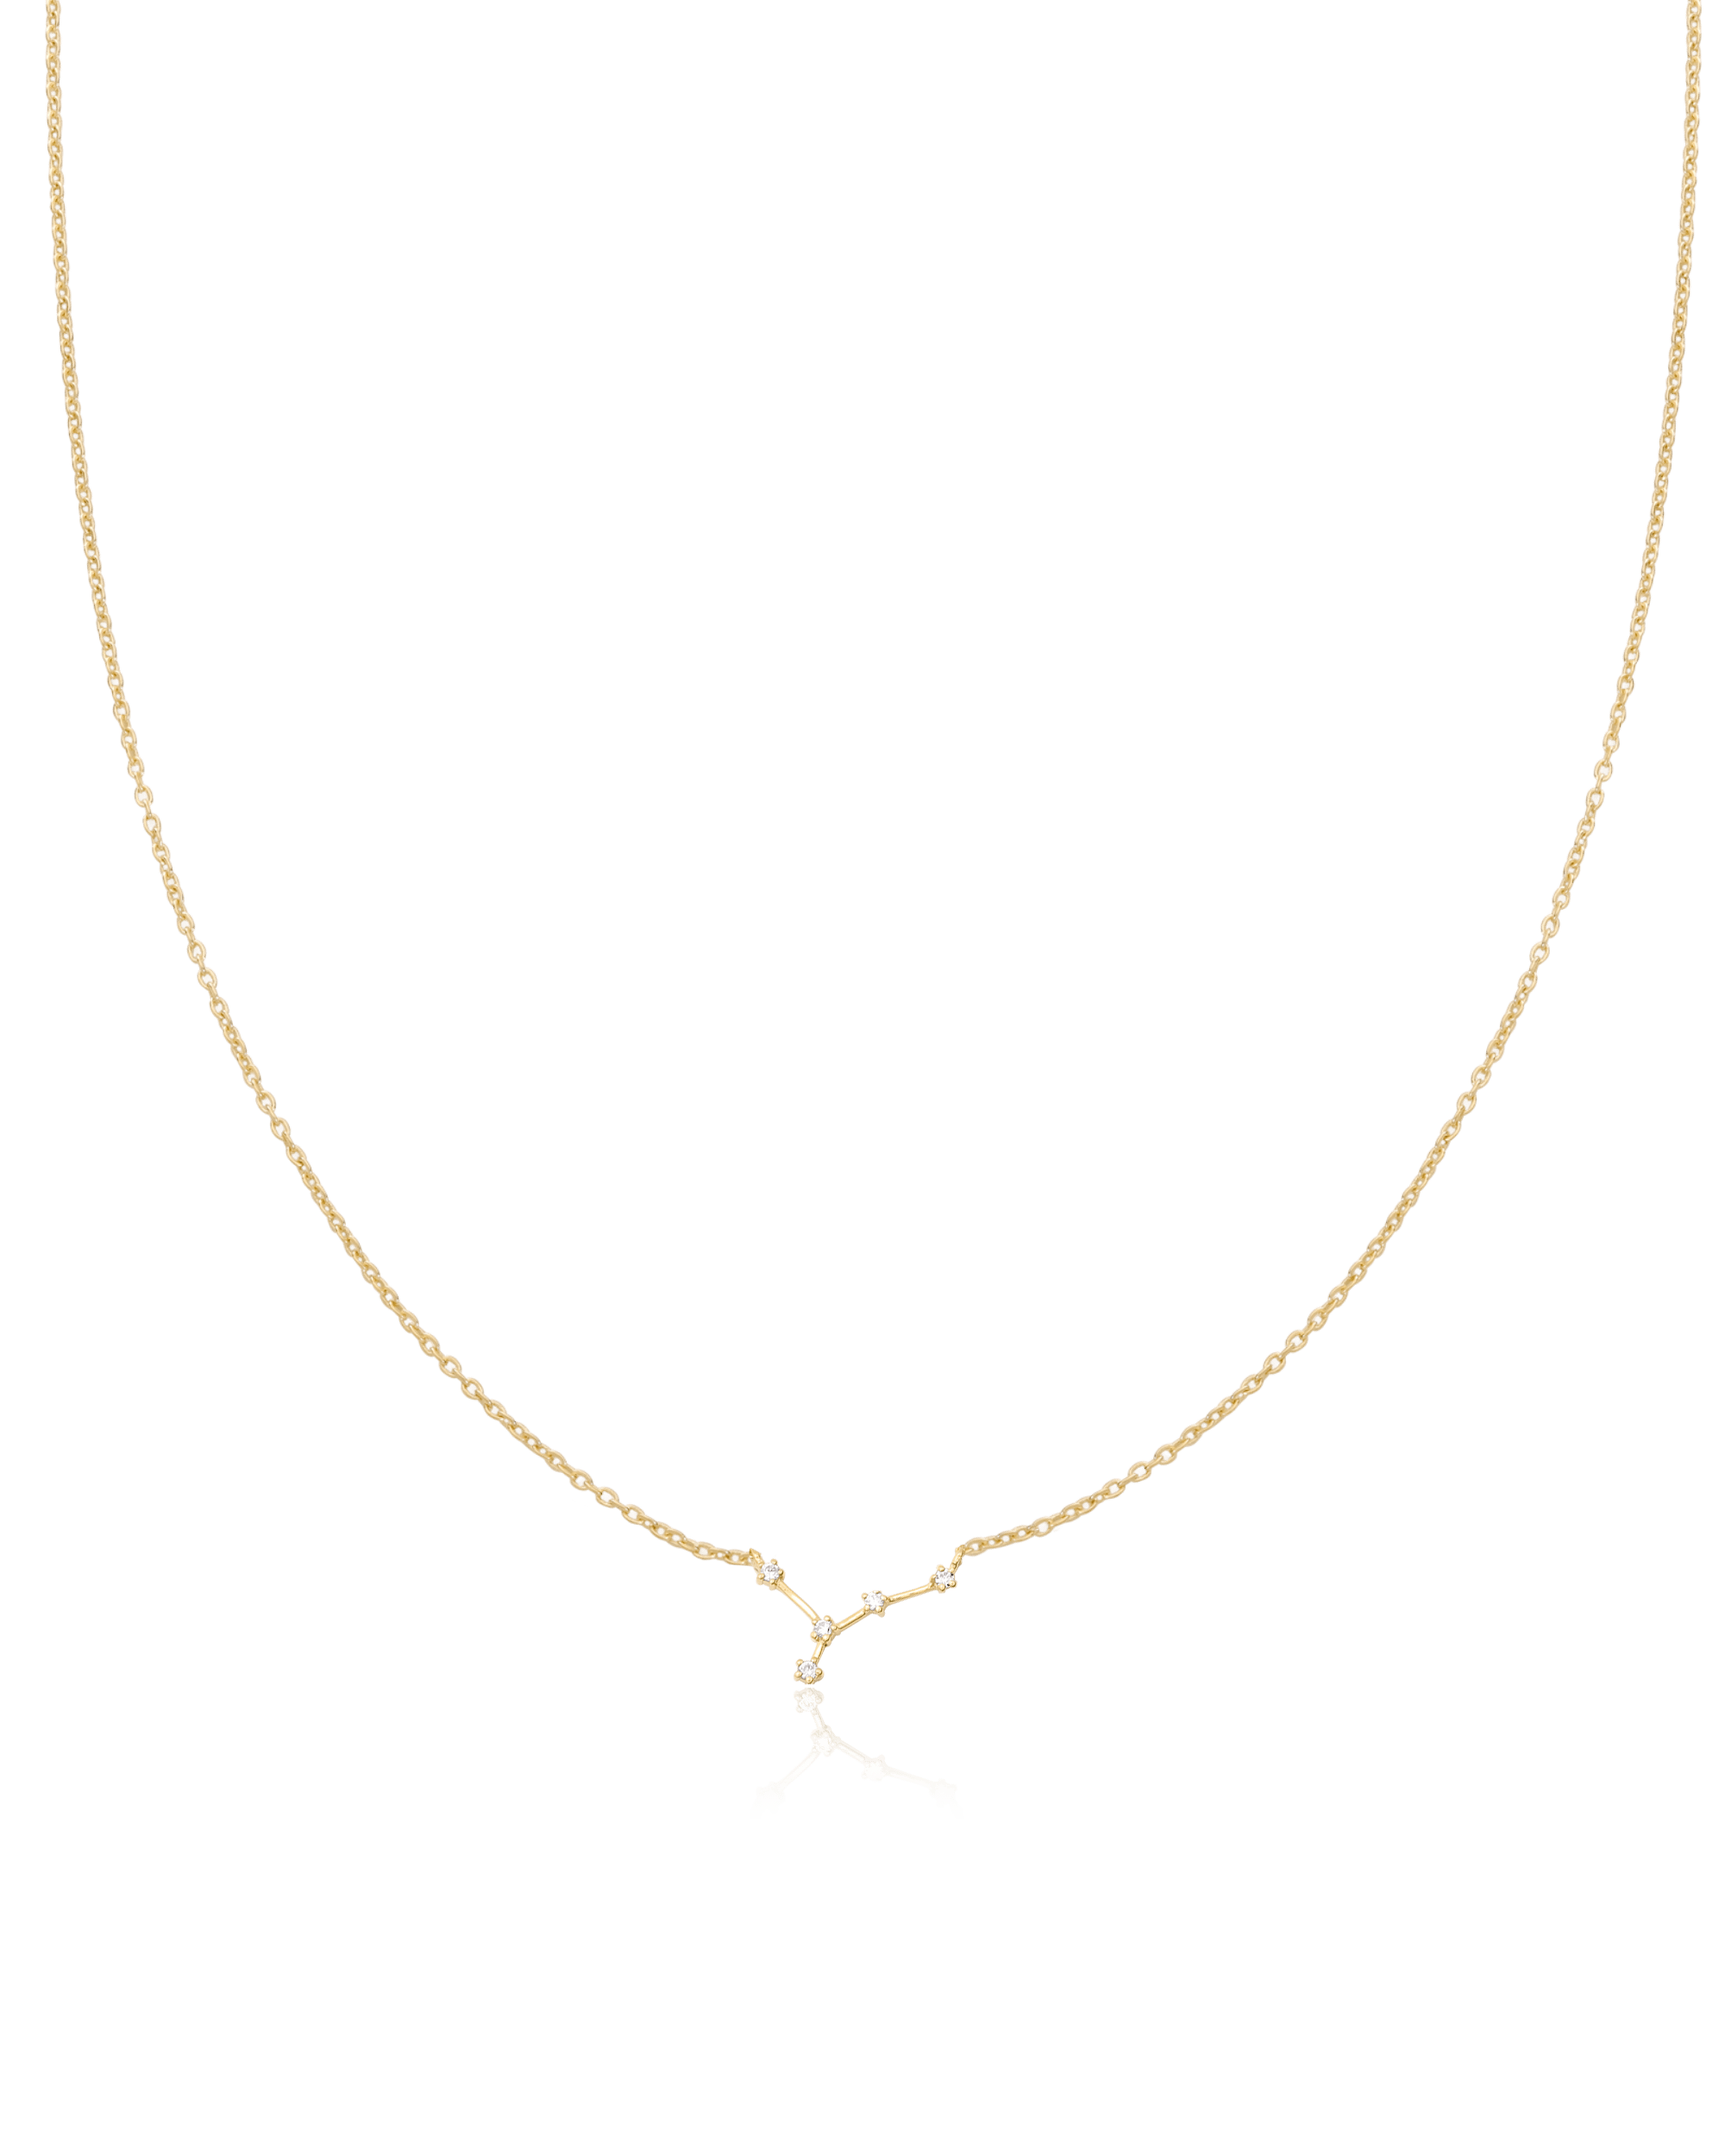 Cancer Constellation Necklace - 18K Gold Vermeil Necklaces magal-dev 16" 